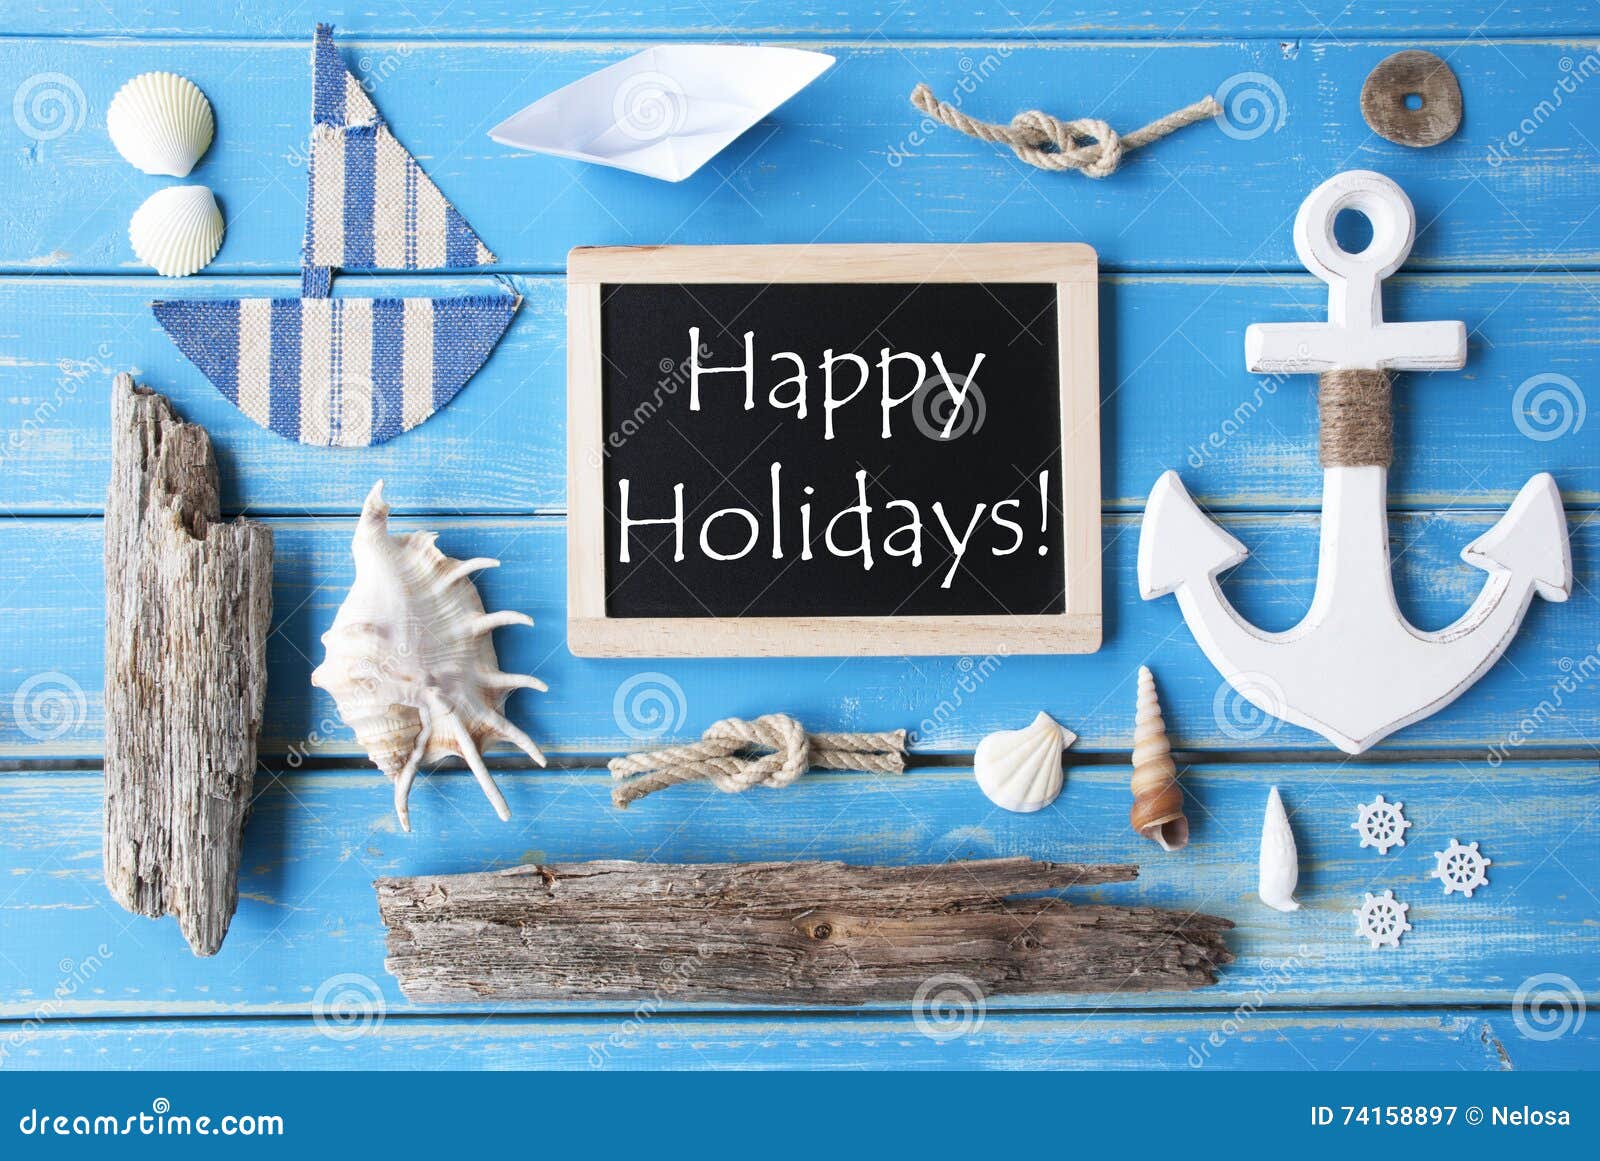 nautic chalkboard and text happy holidays